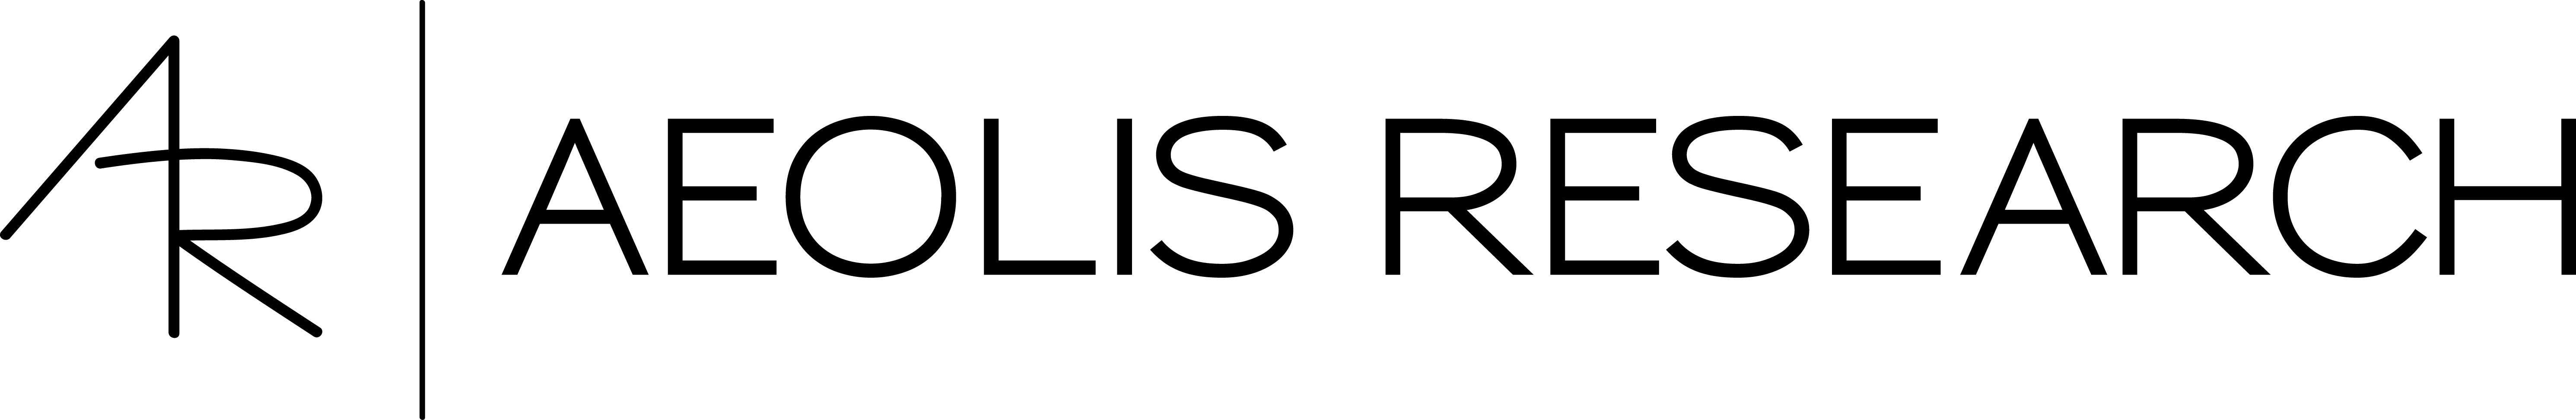 Aeolis Research logo